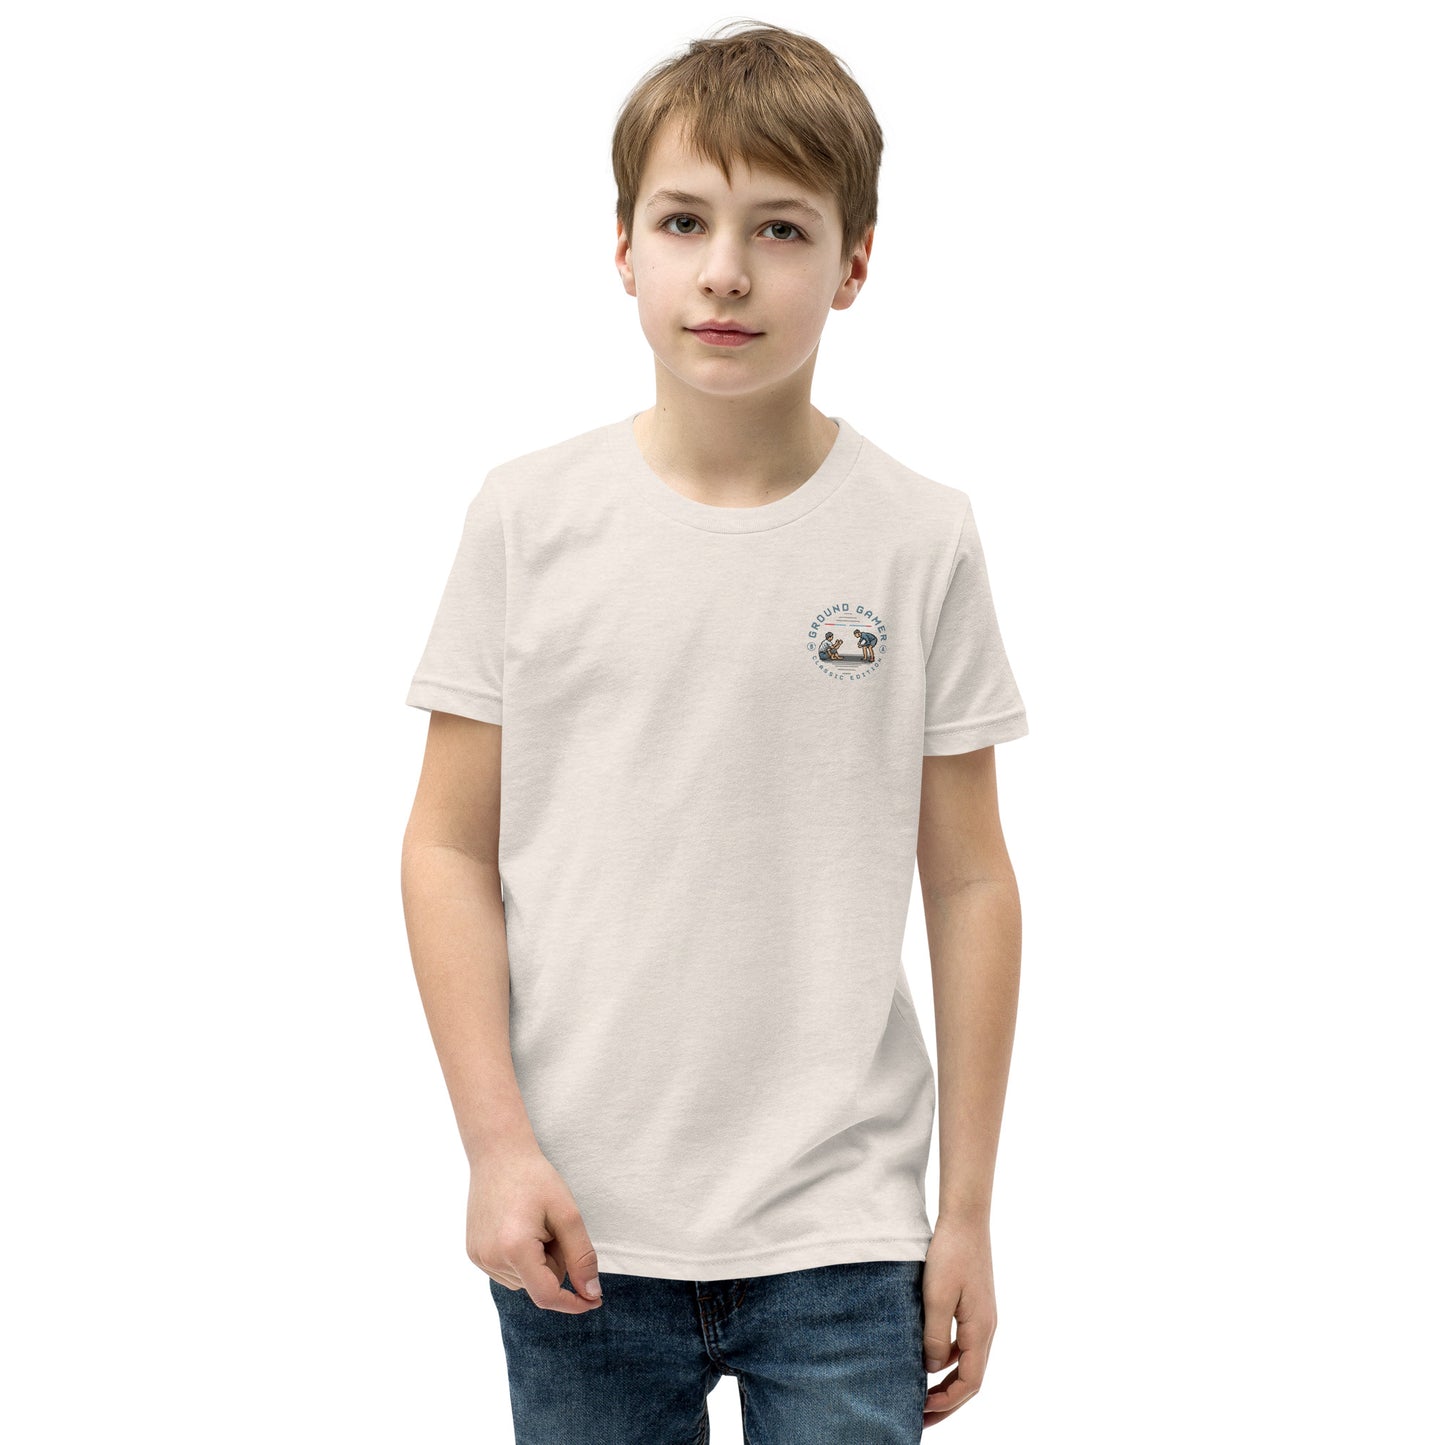 GG Classic Youth Short Sleeve T-Shirt